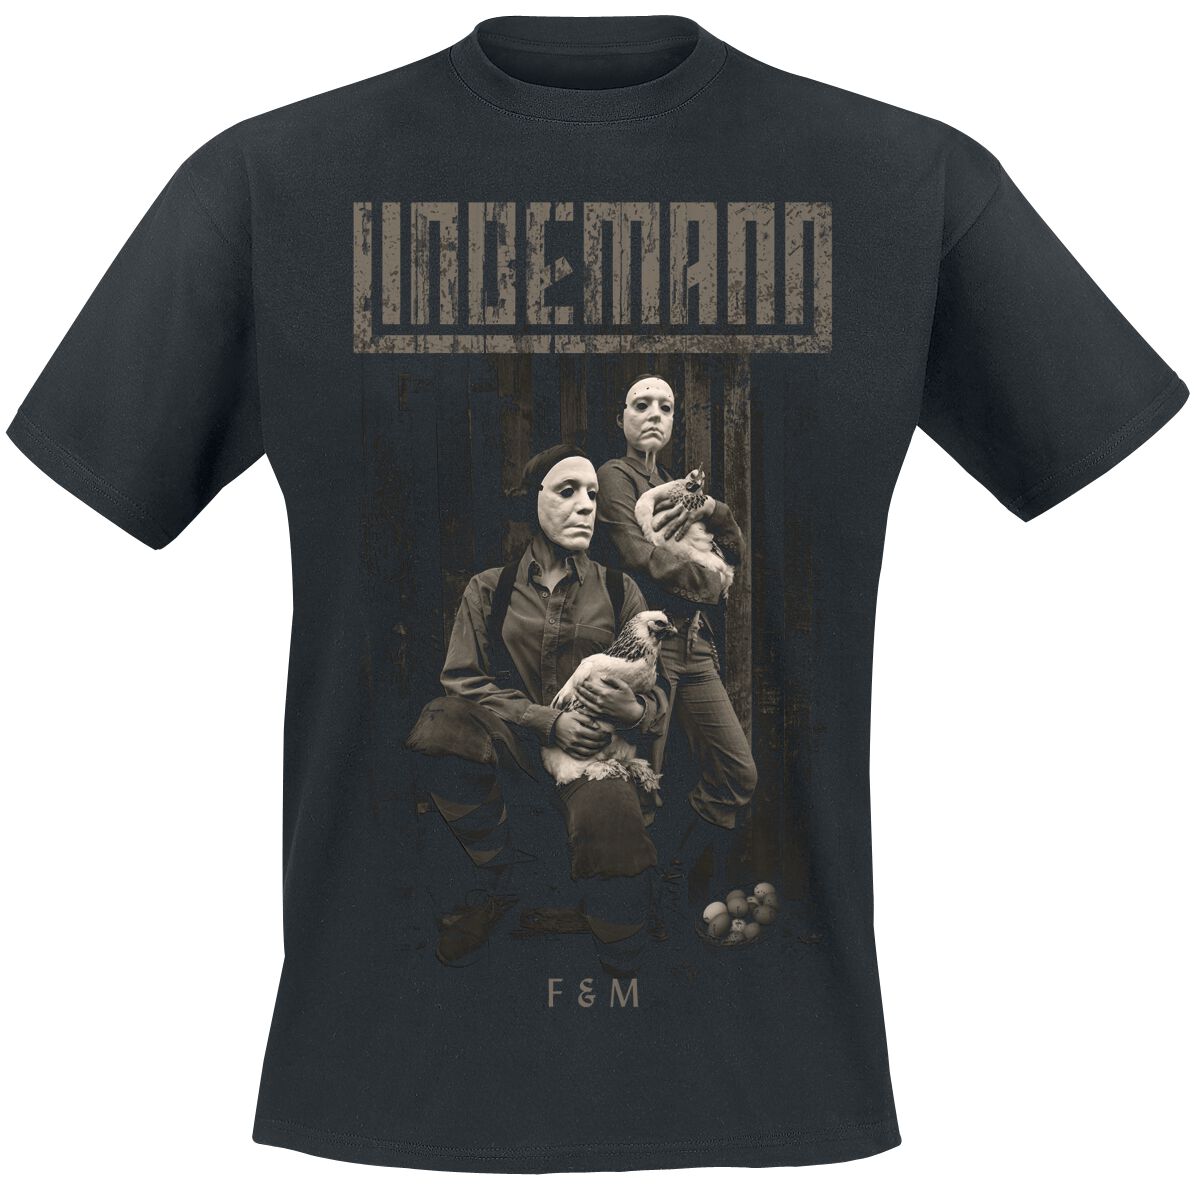 Lindemann F&M T-Shirt black